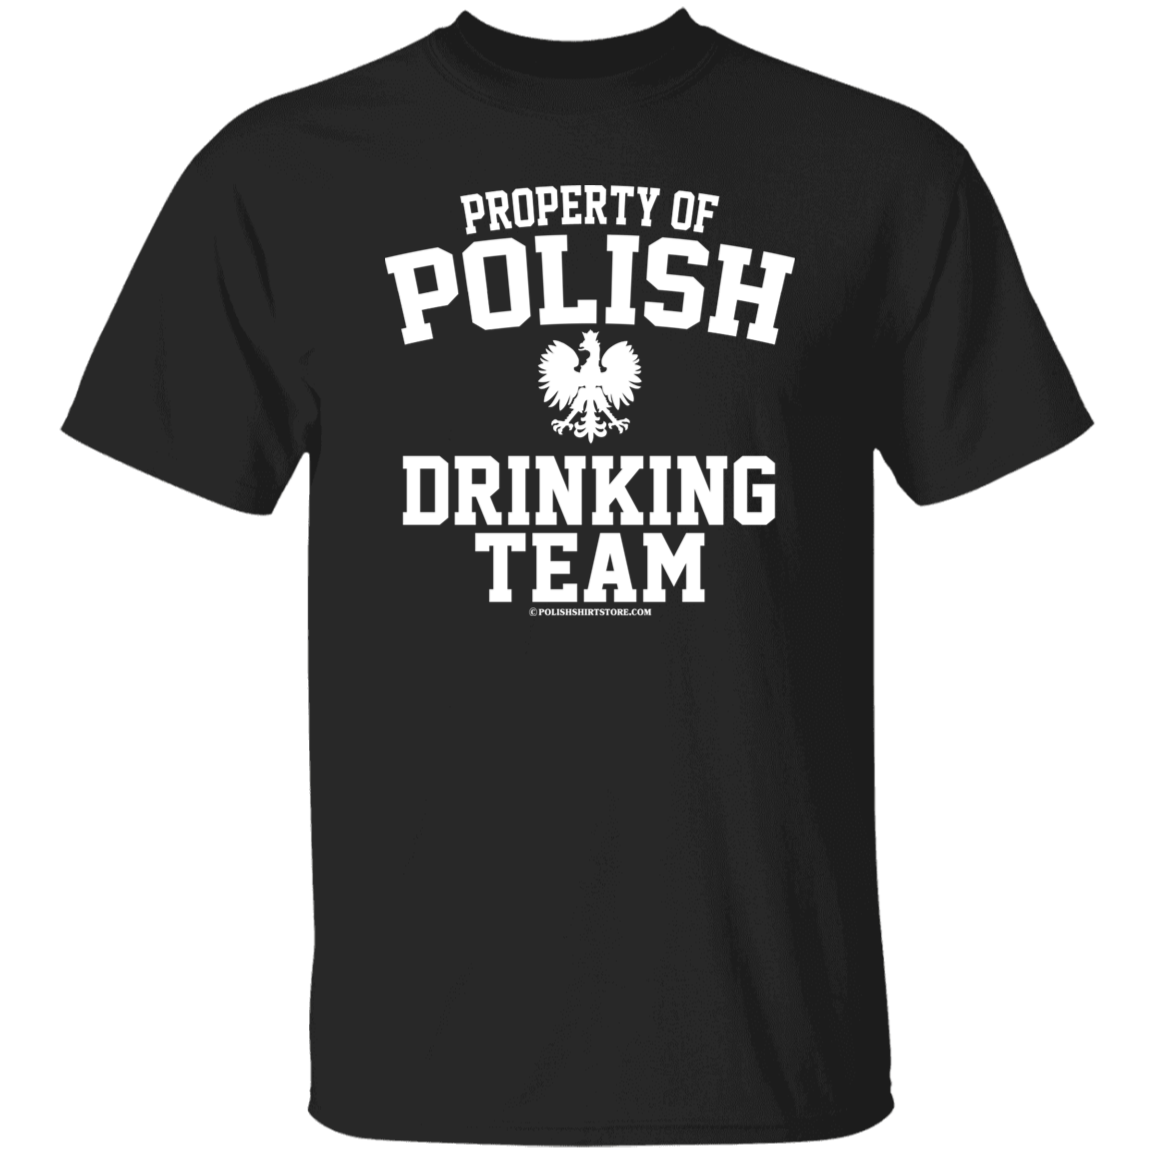 Property of Polish Drinking Team Apparel CustomCat G500 5.3 oz. T-Shirt Black S